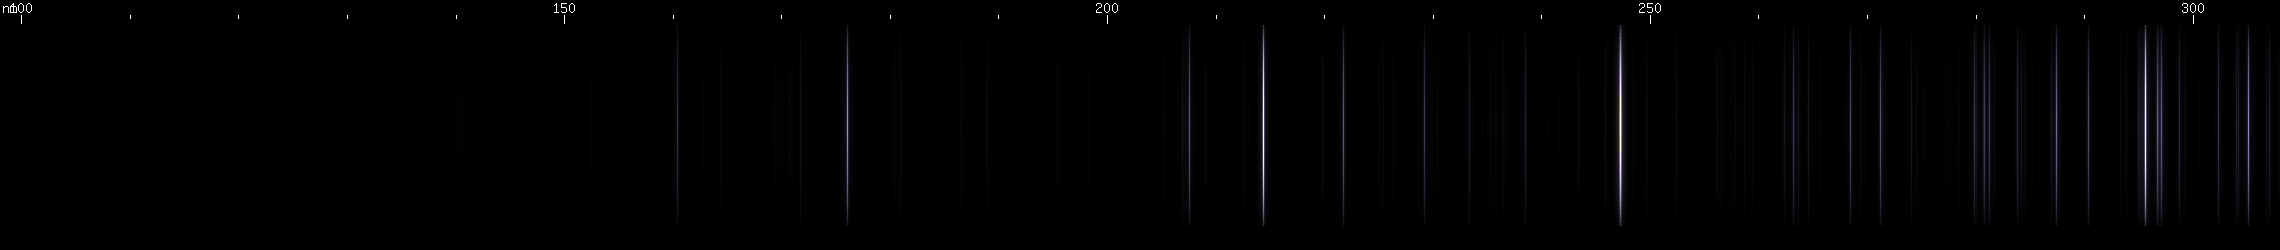 Spectral lines of Rubidium.